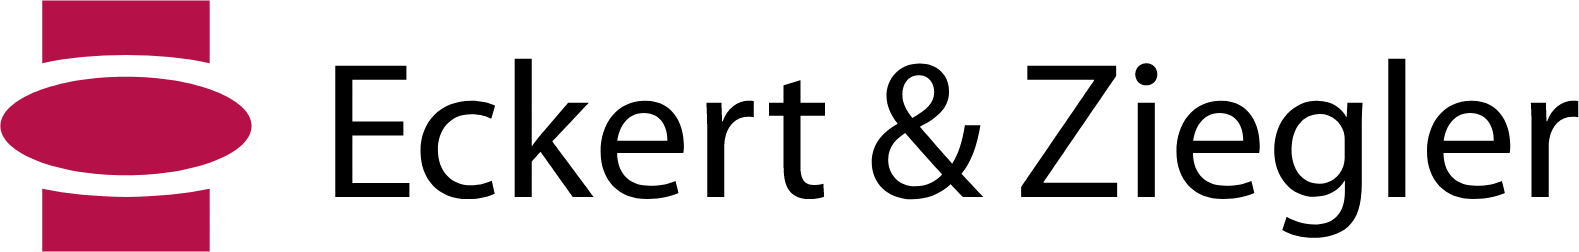 Eckert & Ziegler logo large (transparent PNG)